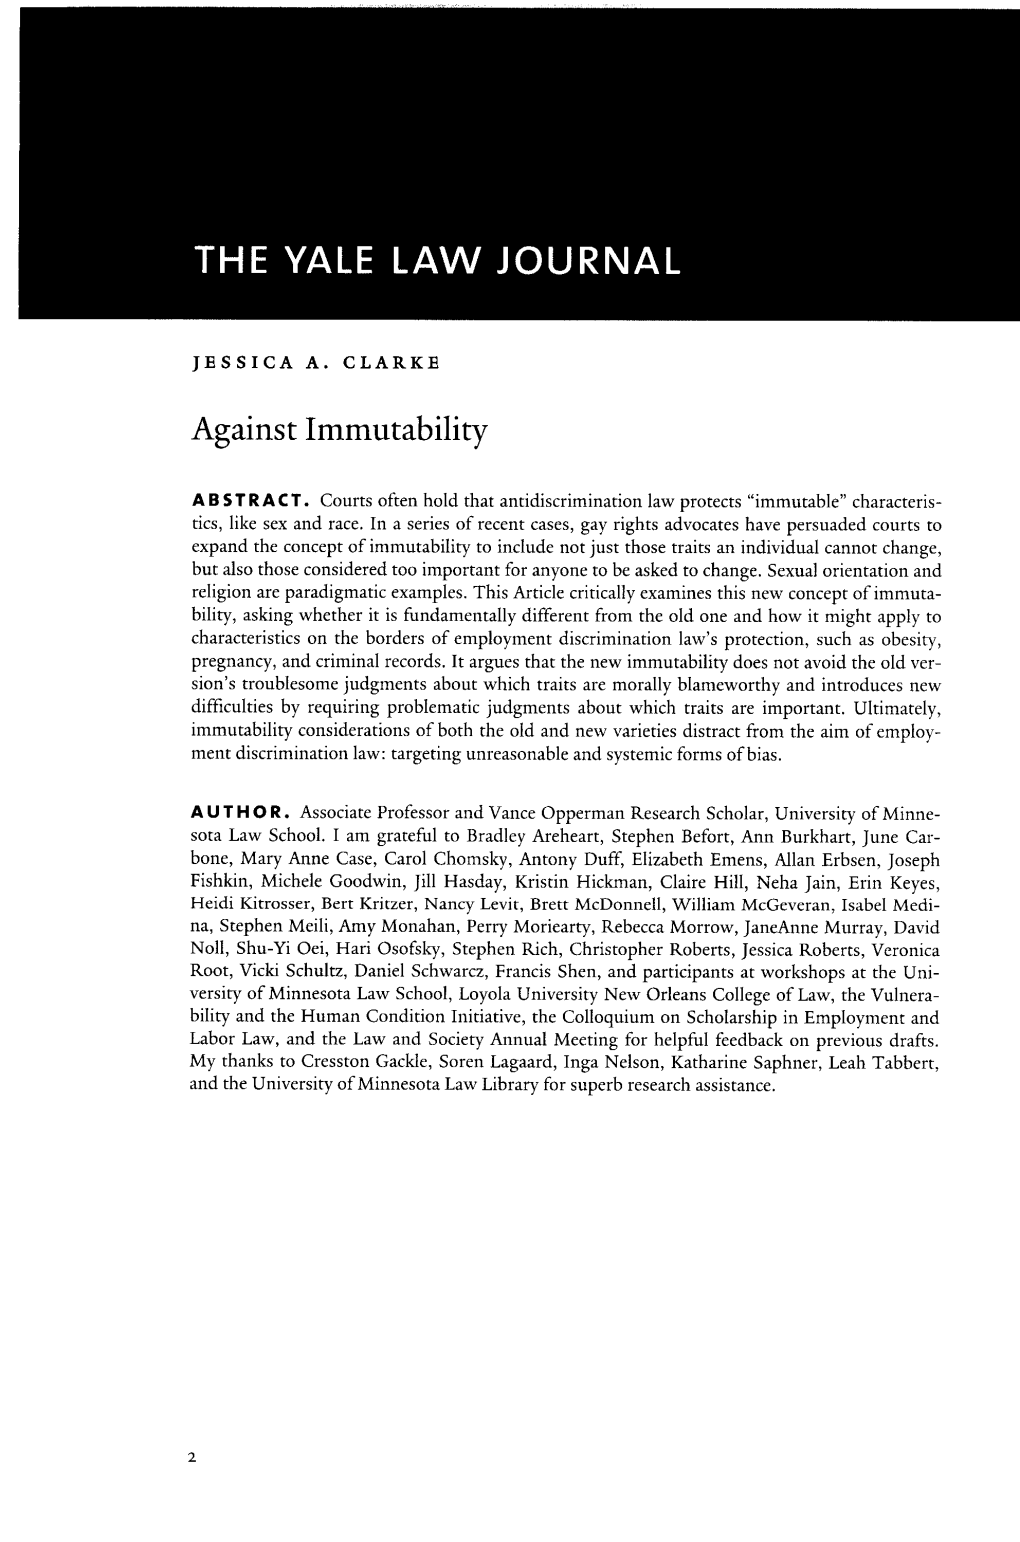 Against Immutability